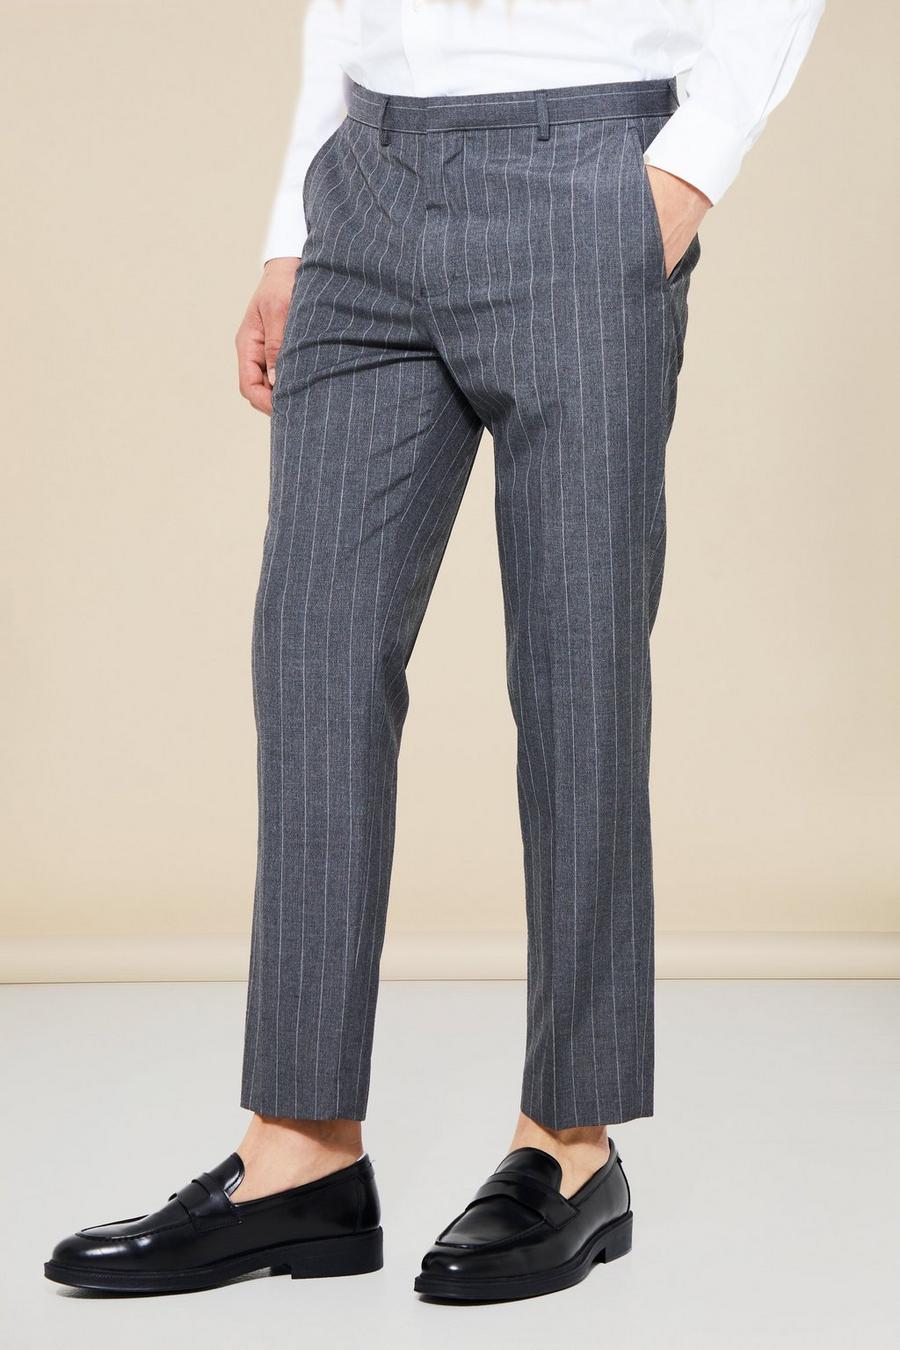 Pantaloni sartoriali Slim Fit a righe verticali, Dark grey gris